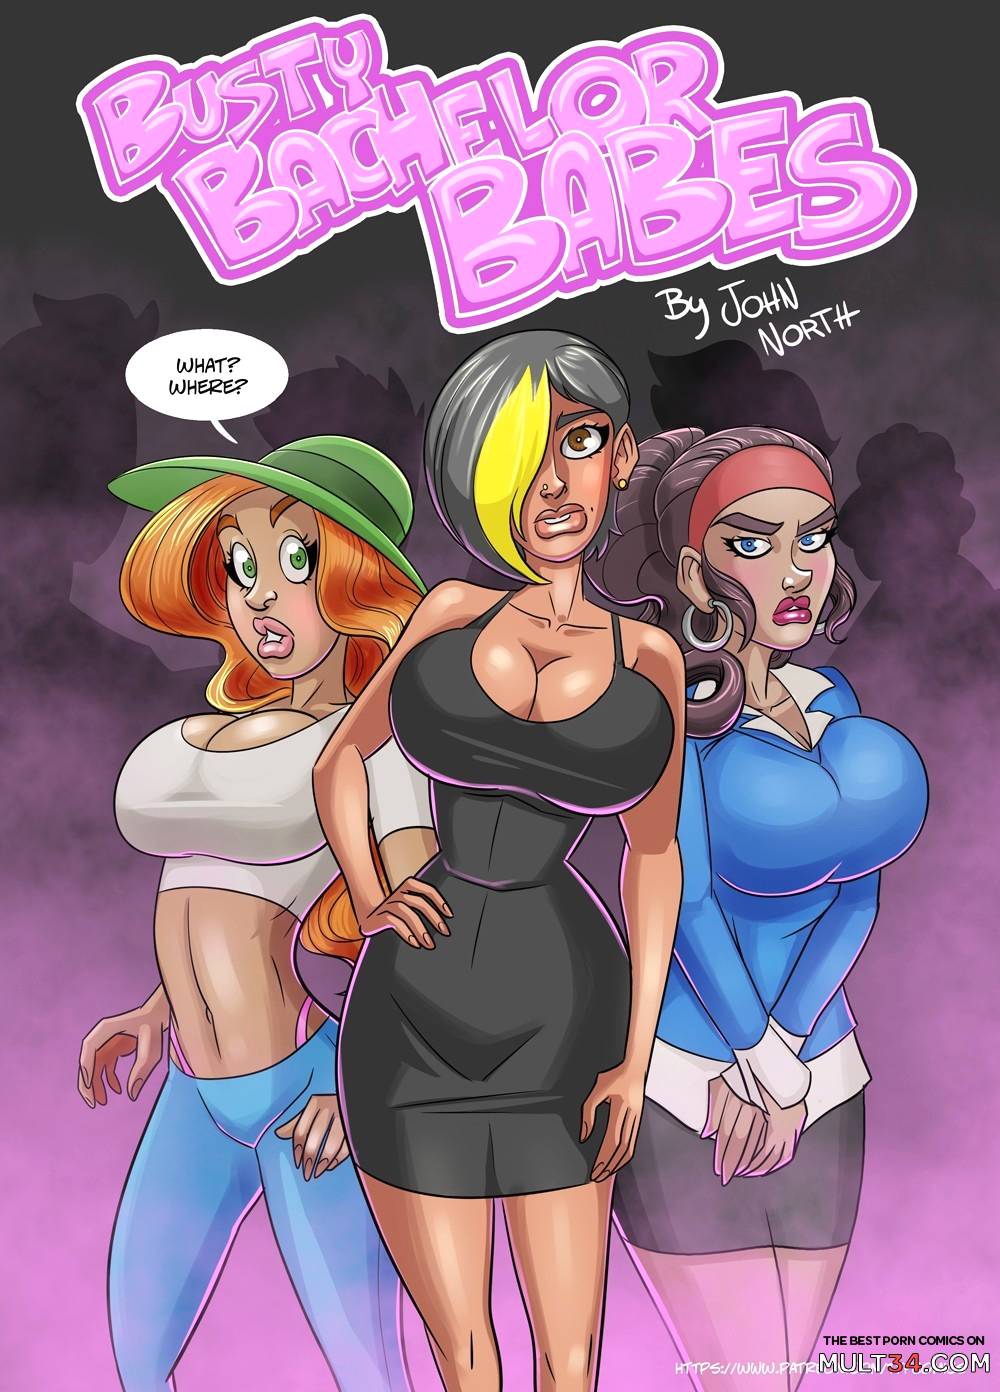 Cartoon Porn Babes - Busty Bachelor Babes porn comic - the best cartoon porn comics, Rule 34 |  MULT34